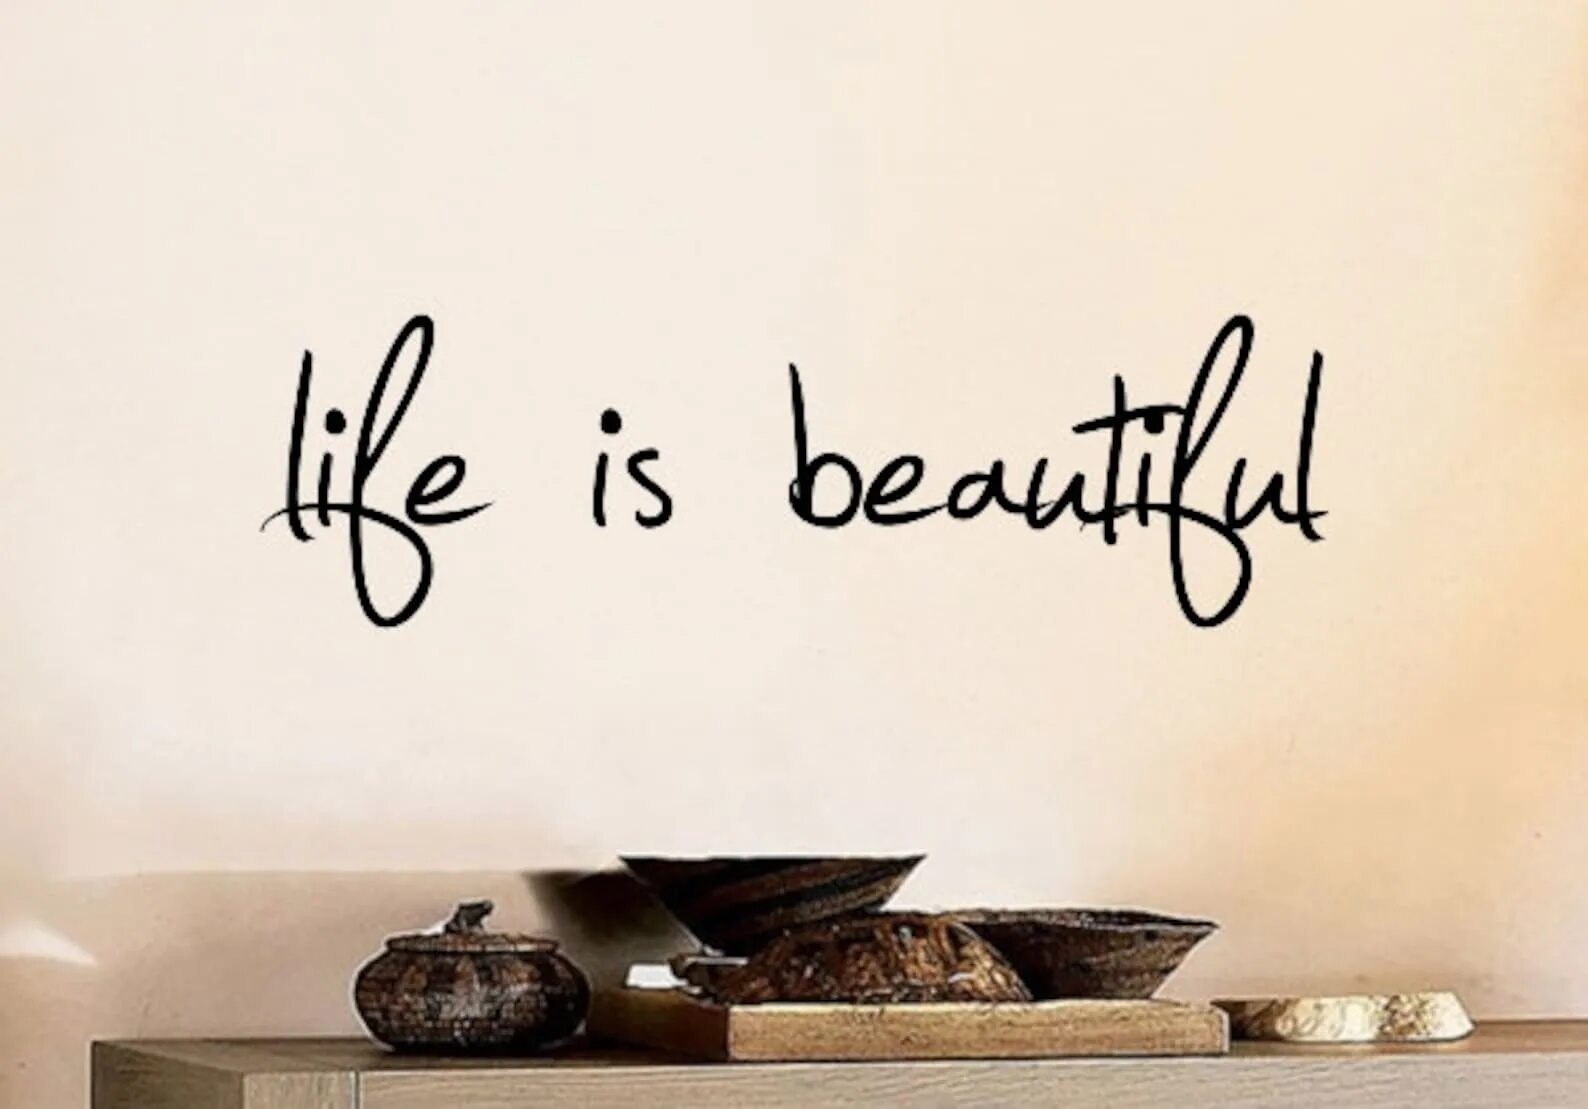 Life надпись. Жизнь прекрасна надпись. Life is beautiful надпись. Life is beautiful красивая надпись. Life is life год